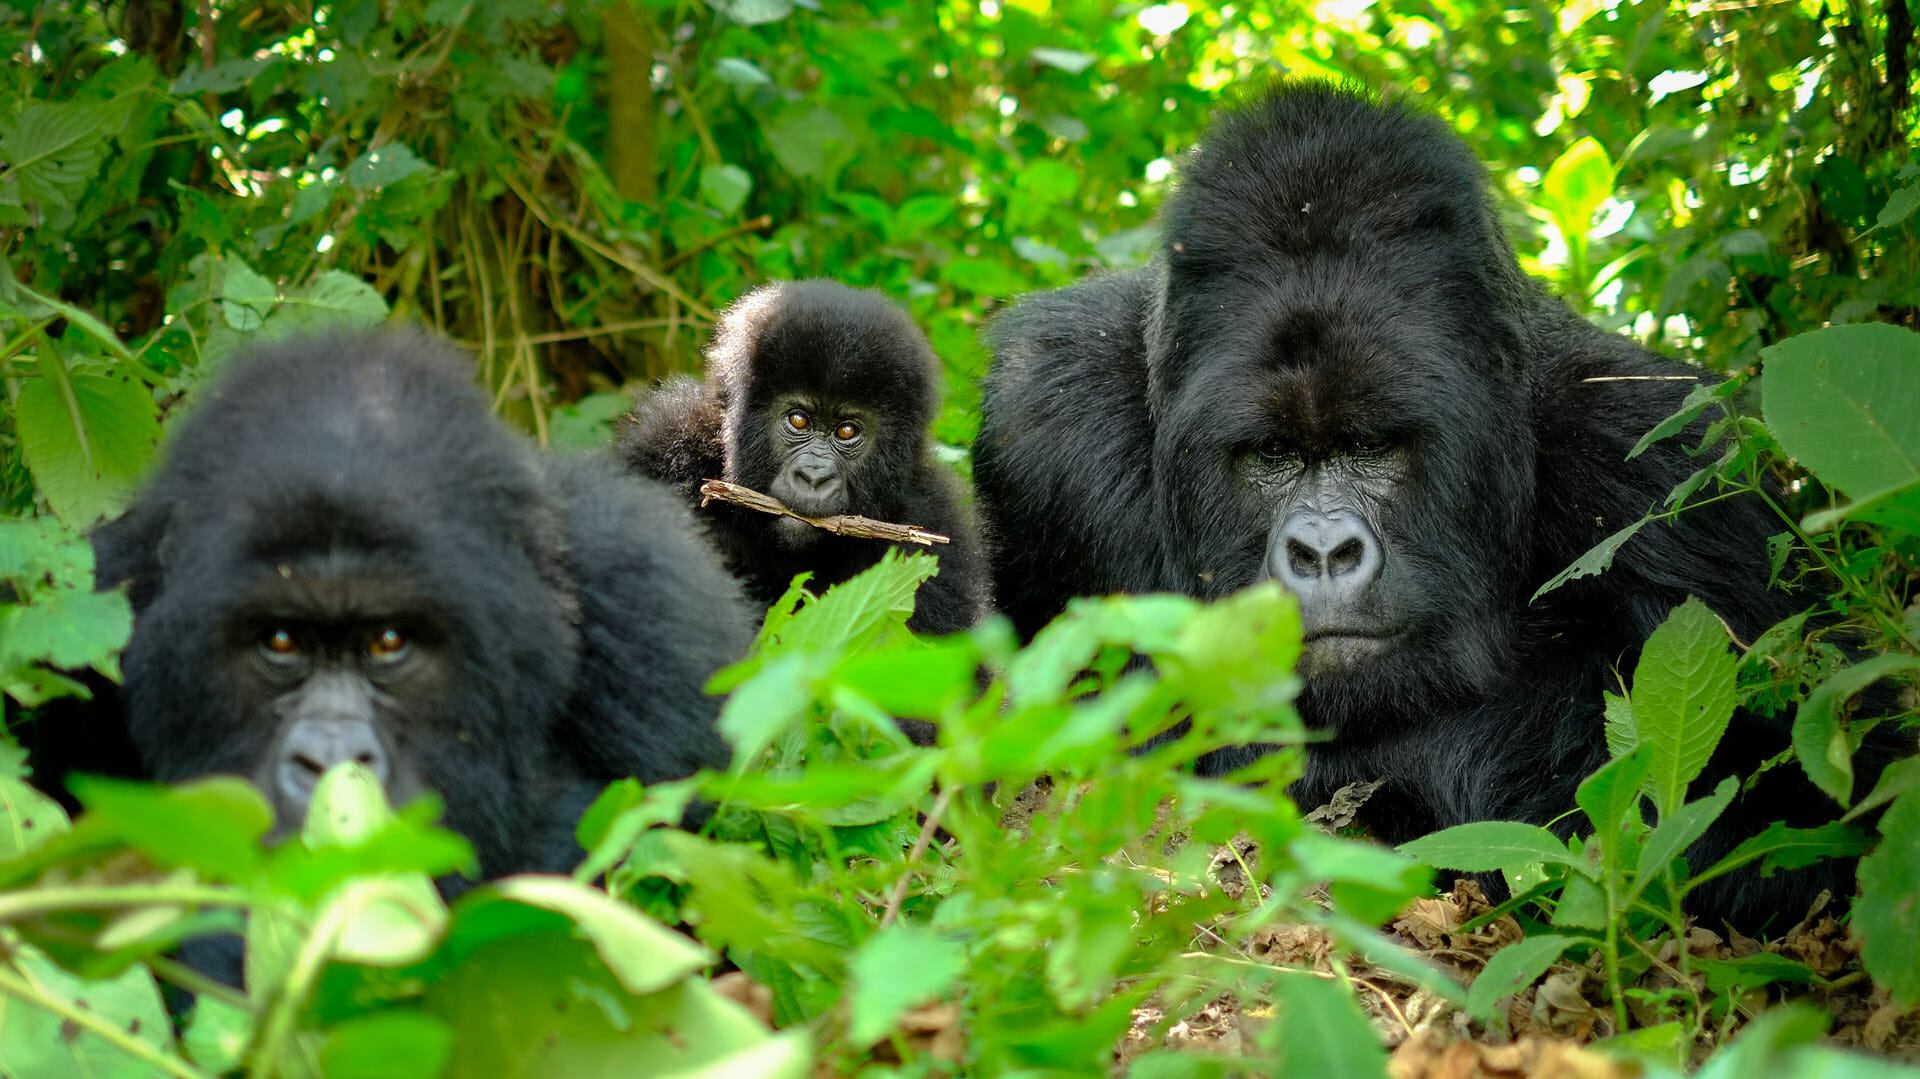 What to expect on a Gorilla Trekking Safari in Rwanda